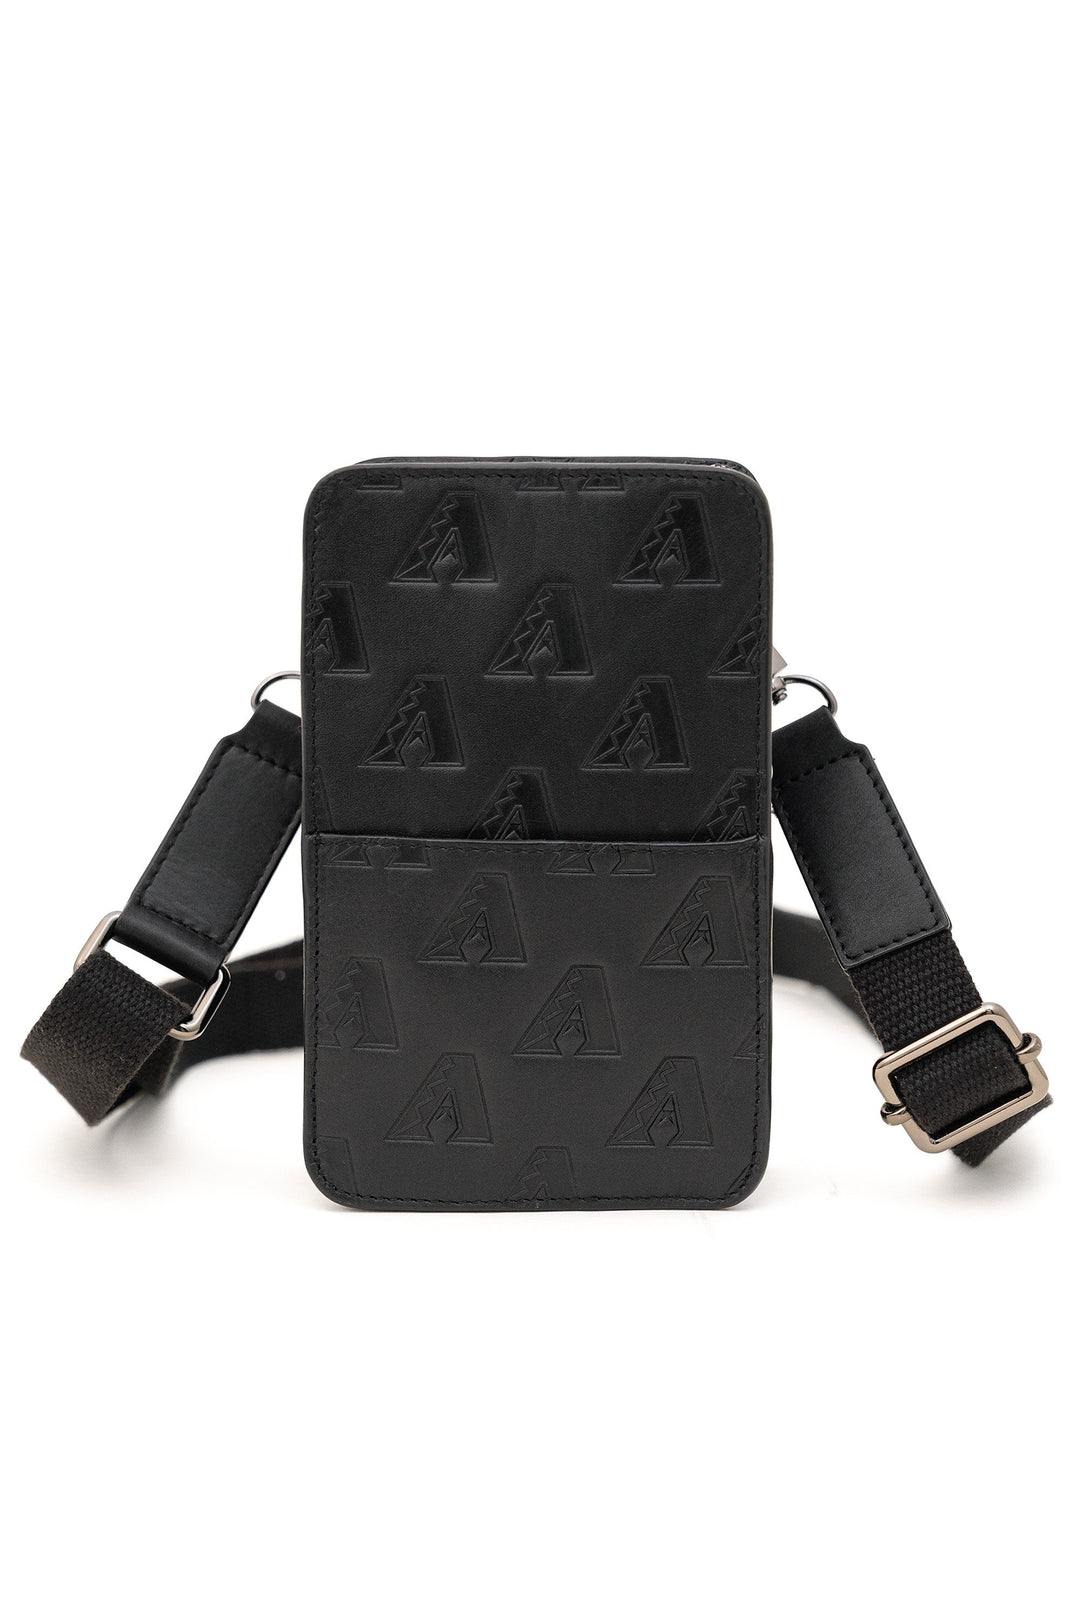 Arizona Diamondbacks Leather Zip Pouch - Bags